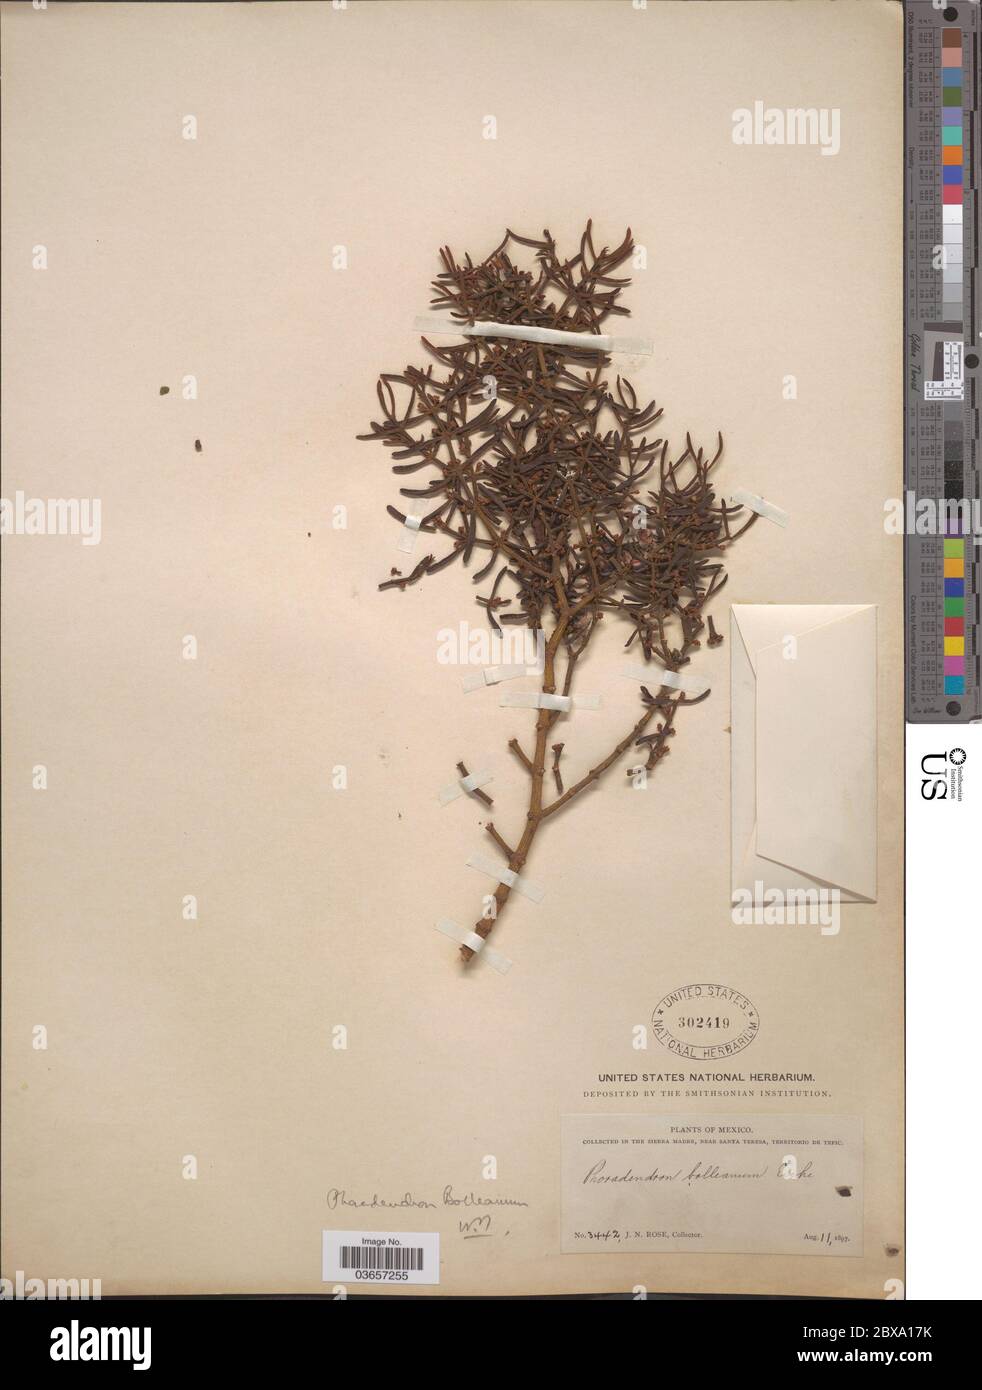 Phoradendron bolleanum Seem Eichler Phoradendron bolleanum Seem Eichler. Stock Photo